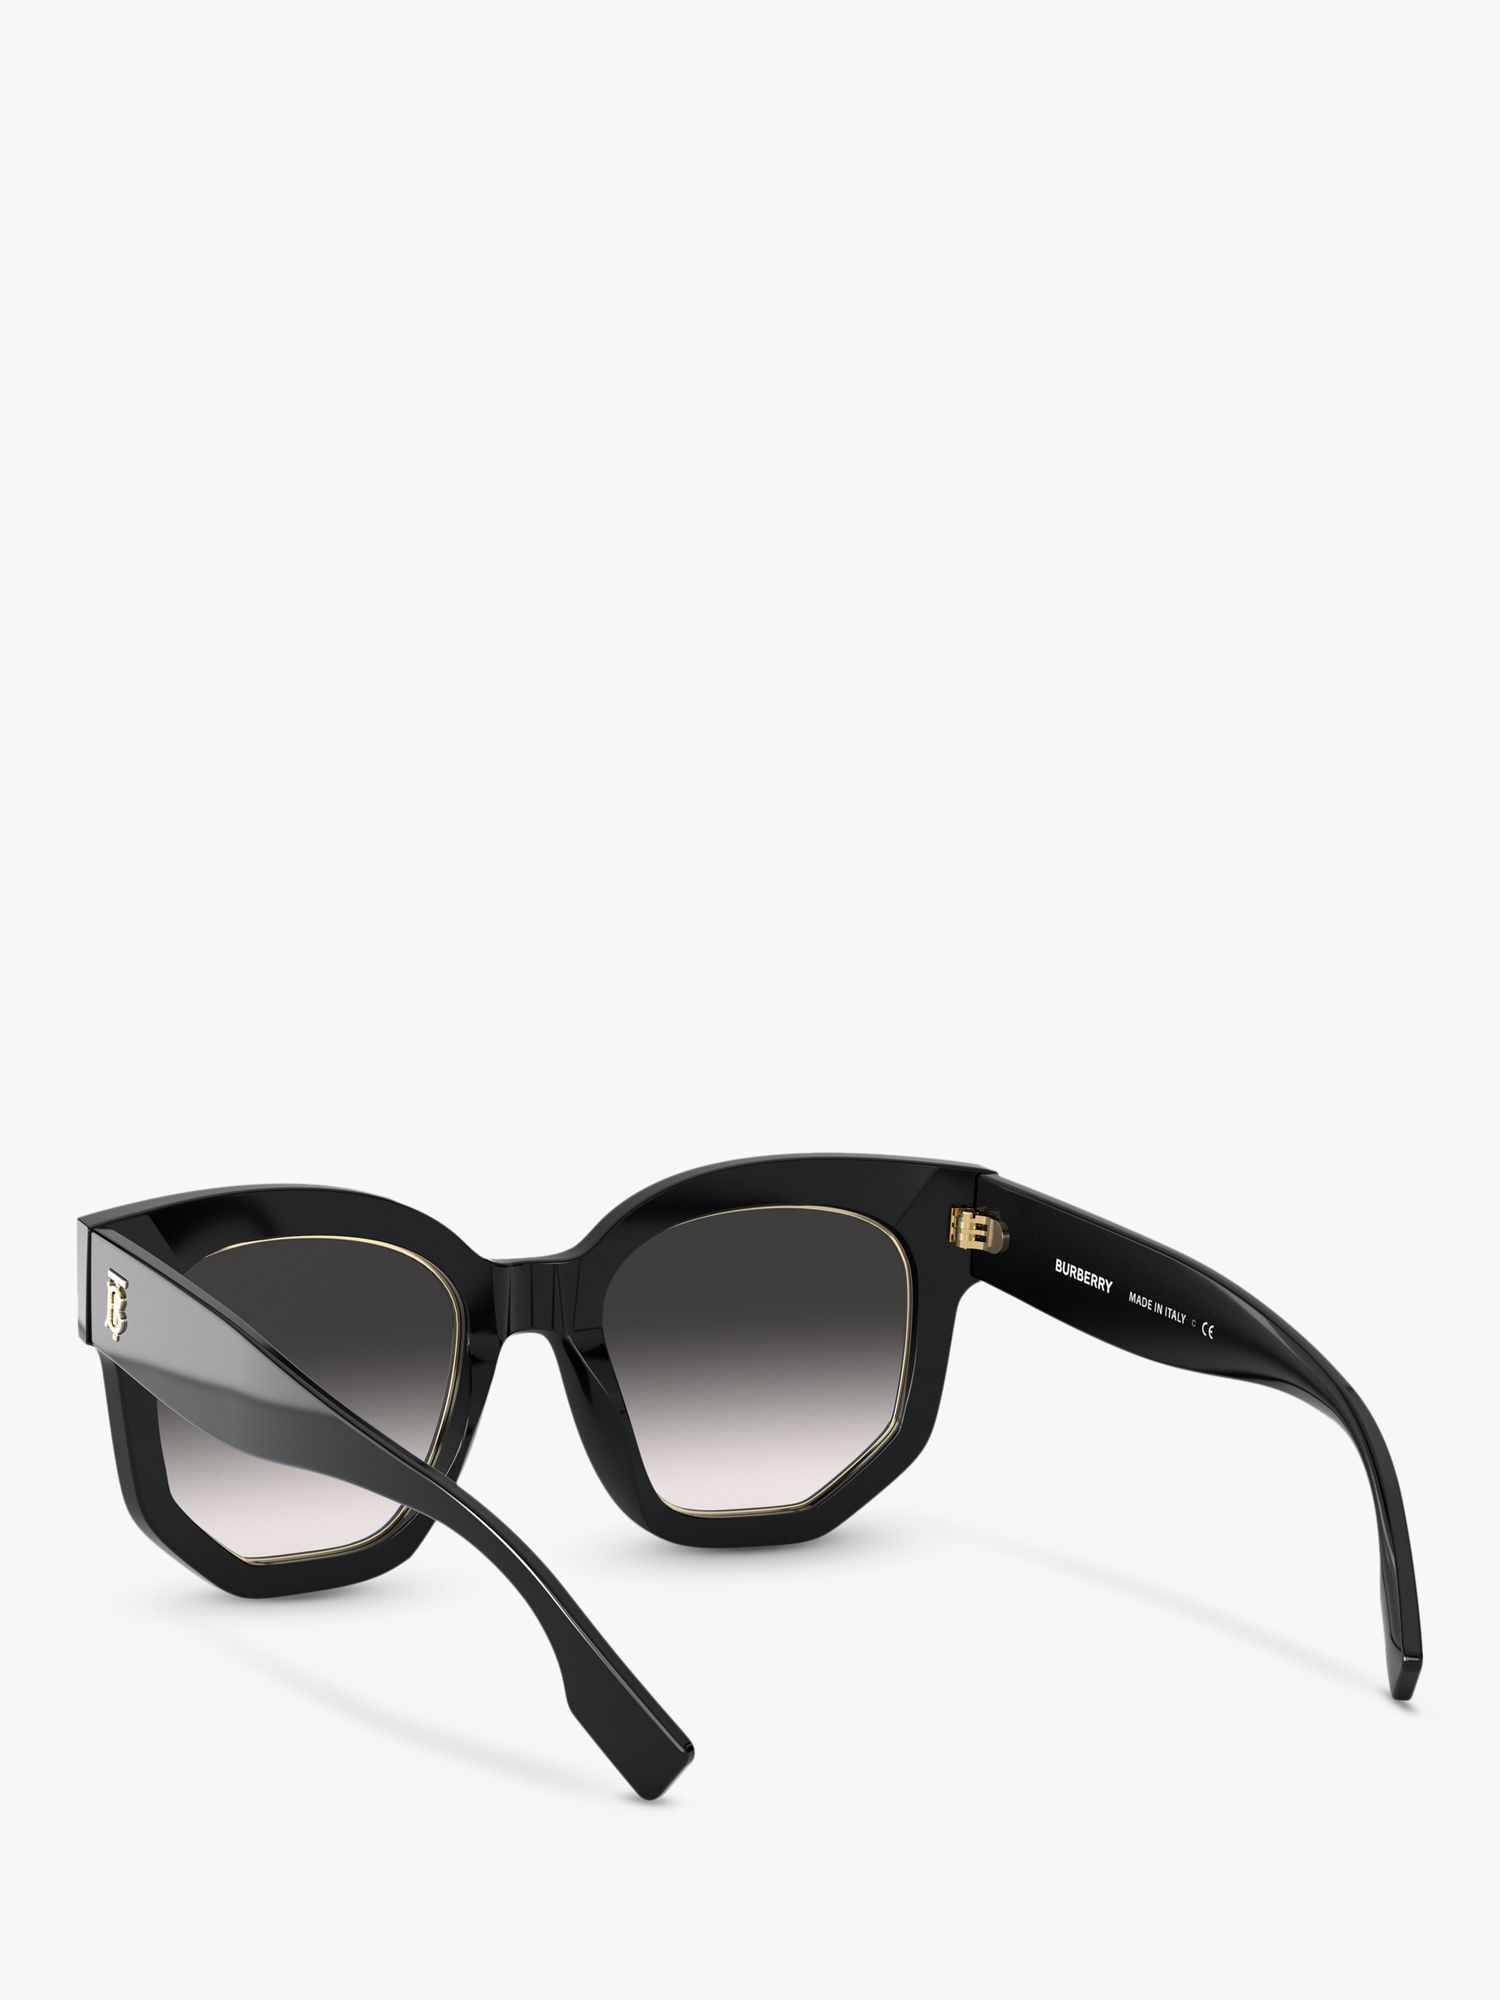 Burberry BE4307 Women's Irregular Sunglasses, Black/Grey Gradient at ...